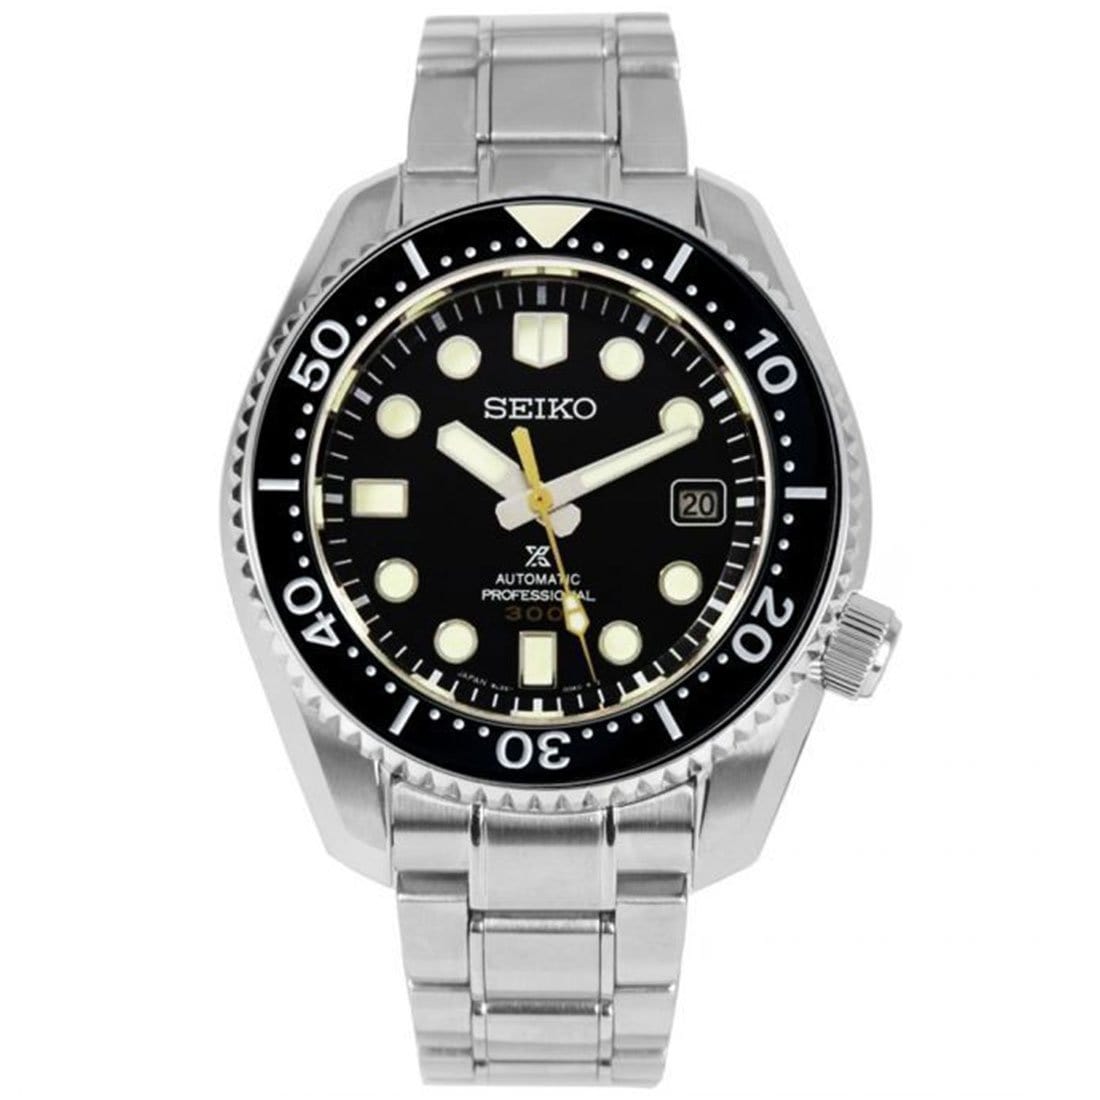 Seiko Marine Master Prospex SBDX023 [SLA021] Limited Edition Divers Watch